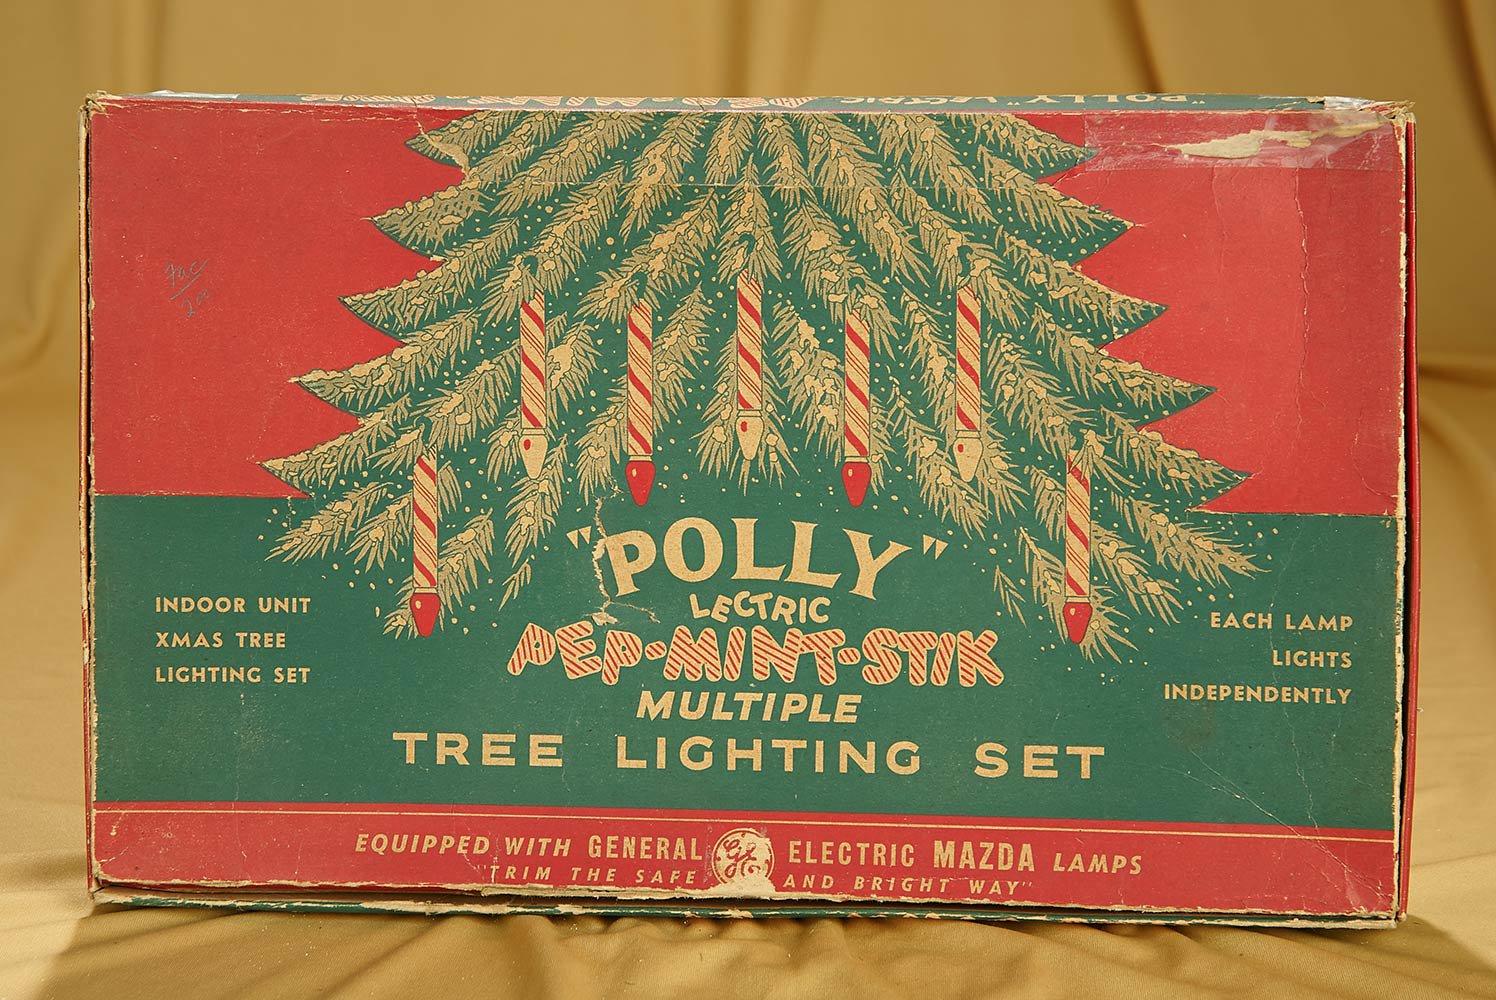 Boxed set of Polly Pep-Mint-Stik Christmas tree lights. $200/300